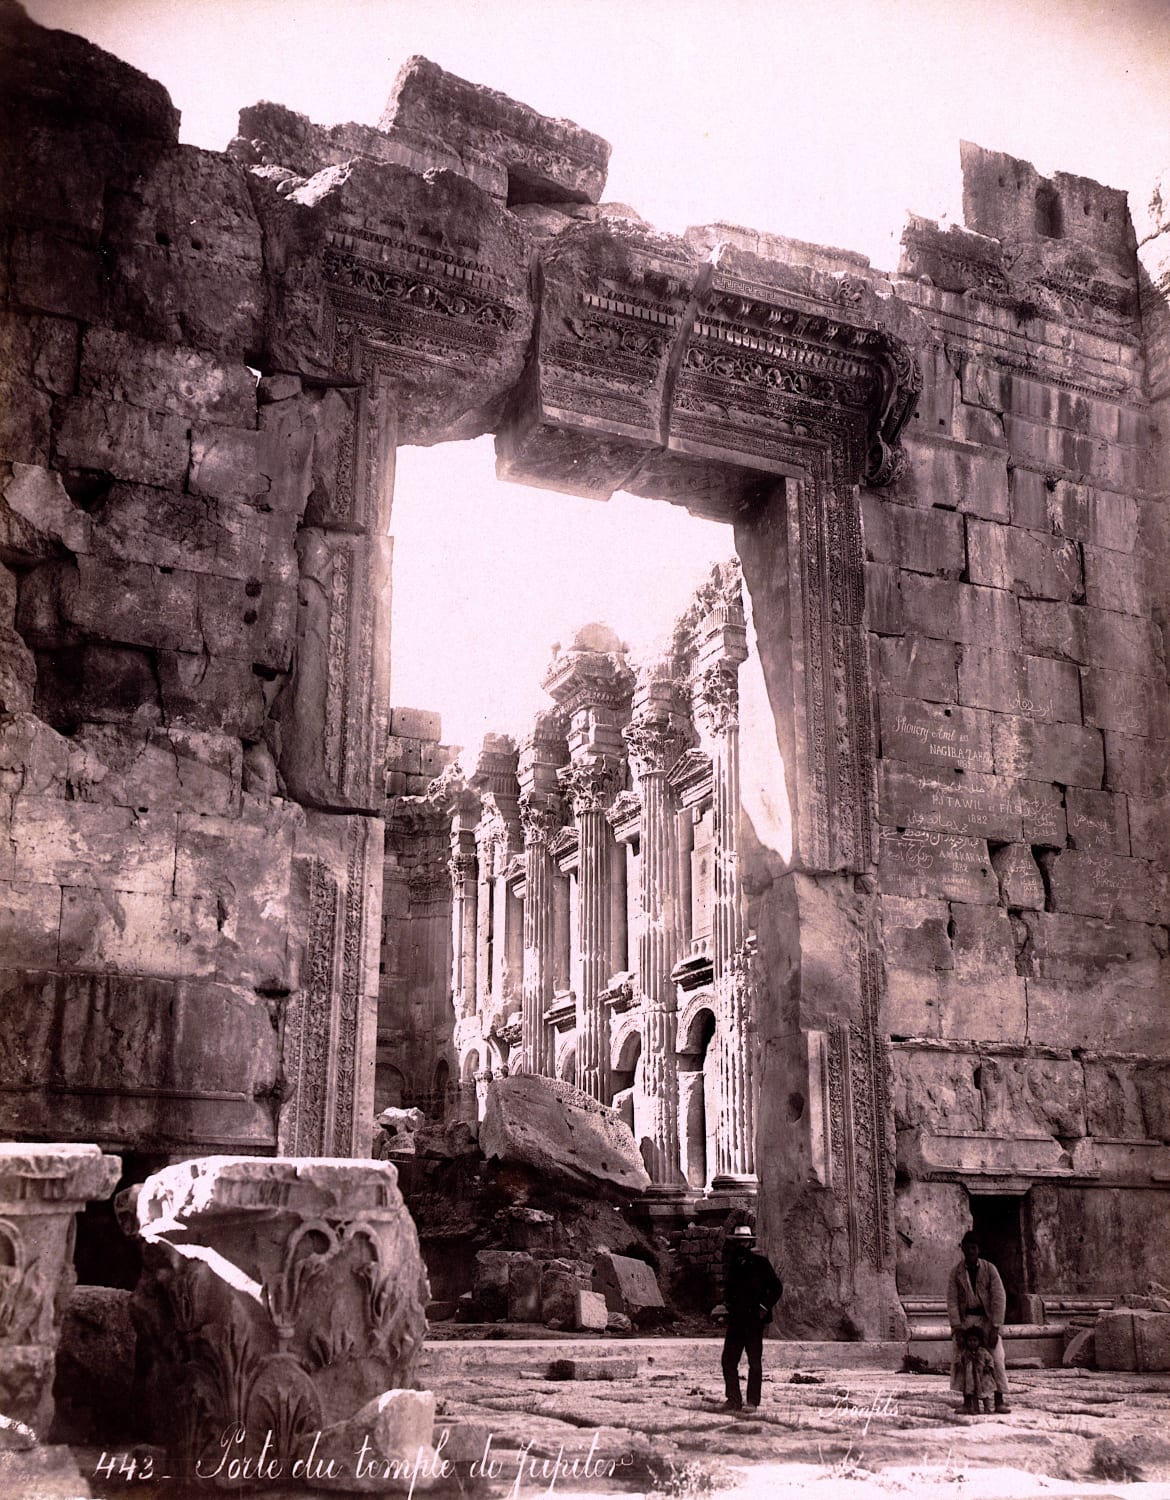 Door to the Temple of Jupiter, Lebanon